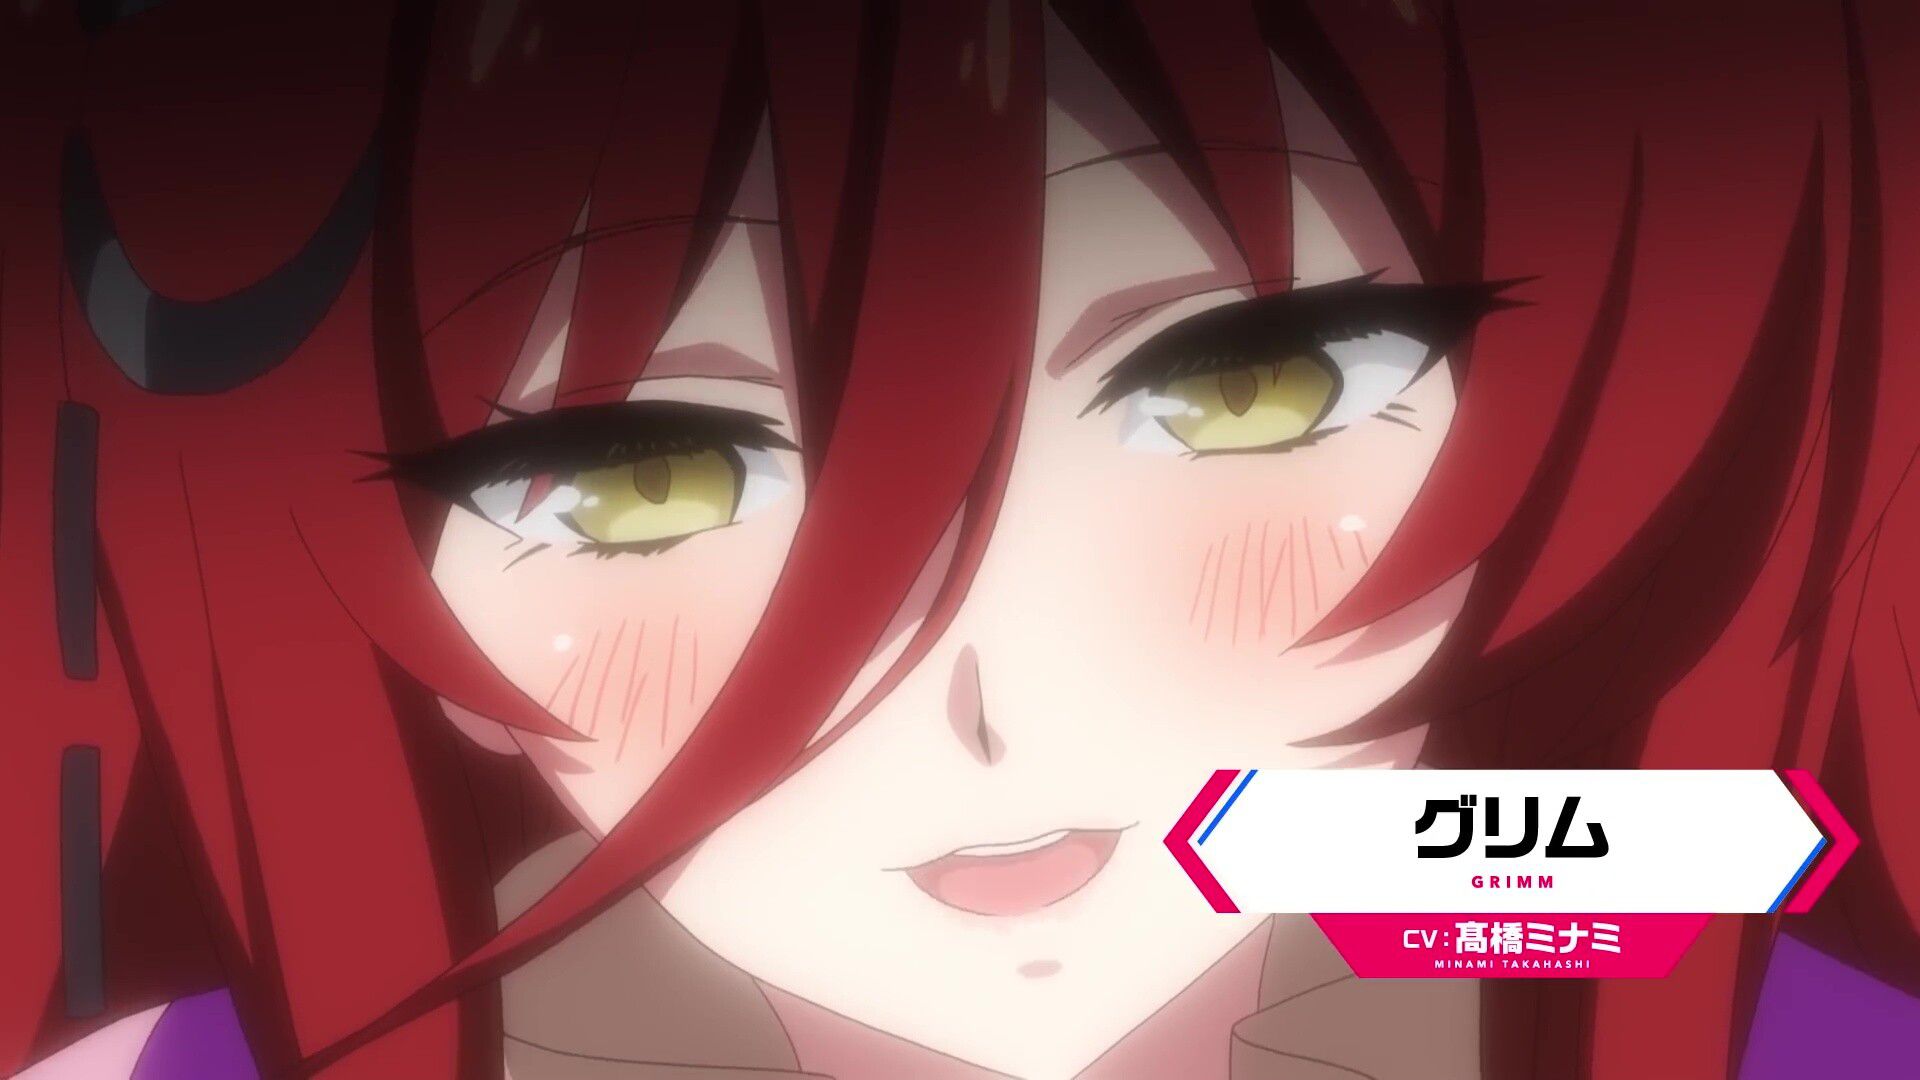 Anime "Combatant, I'm dispatched! Erotic costume girls and neta! April broadcasting starts 21